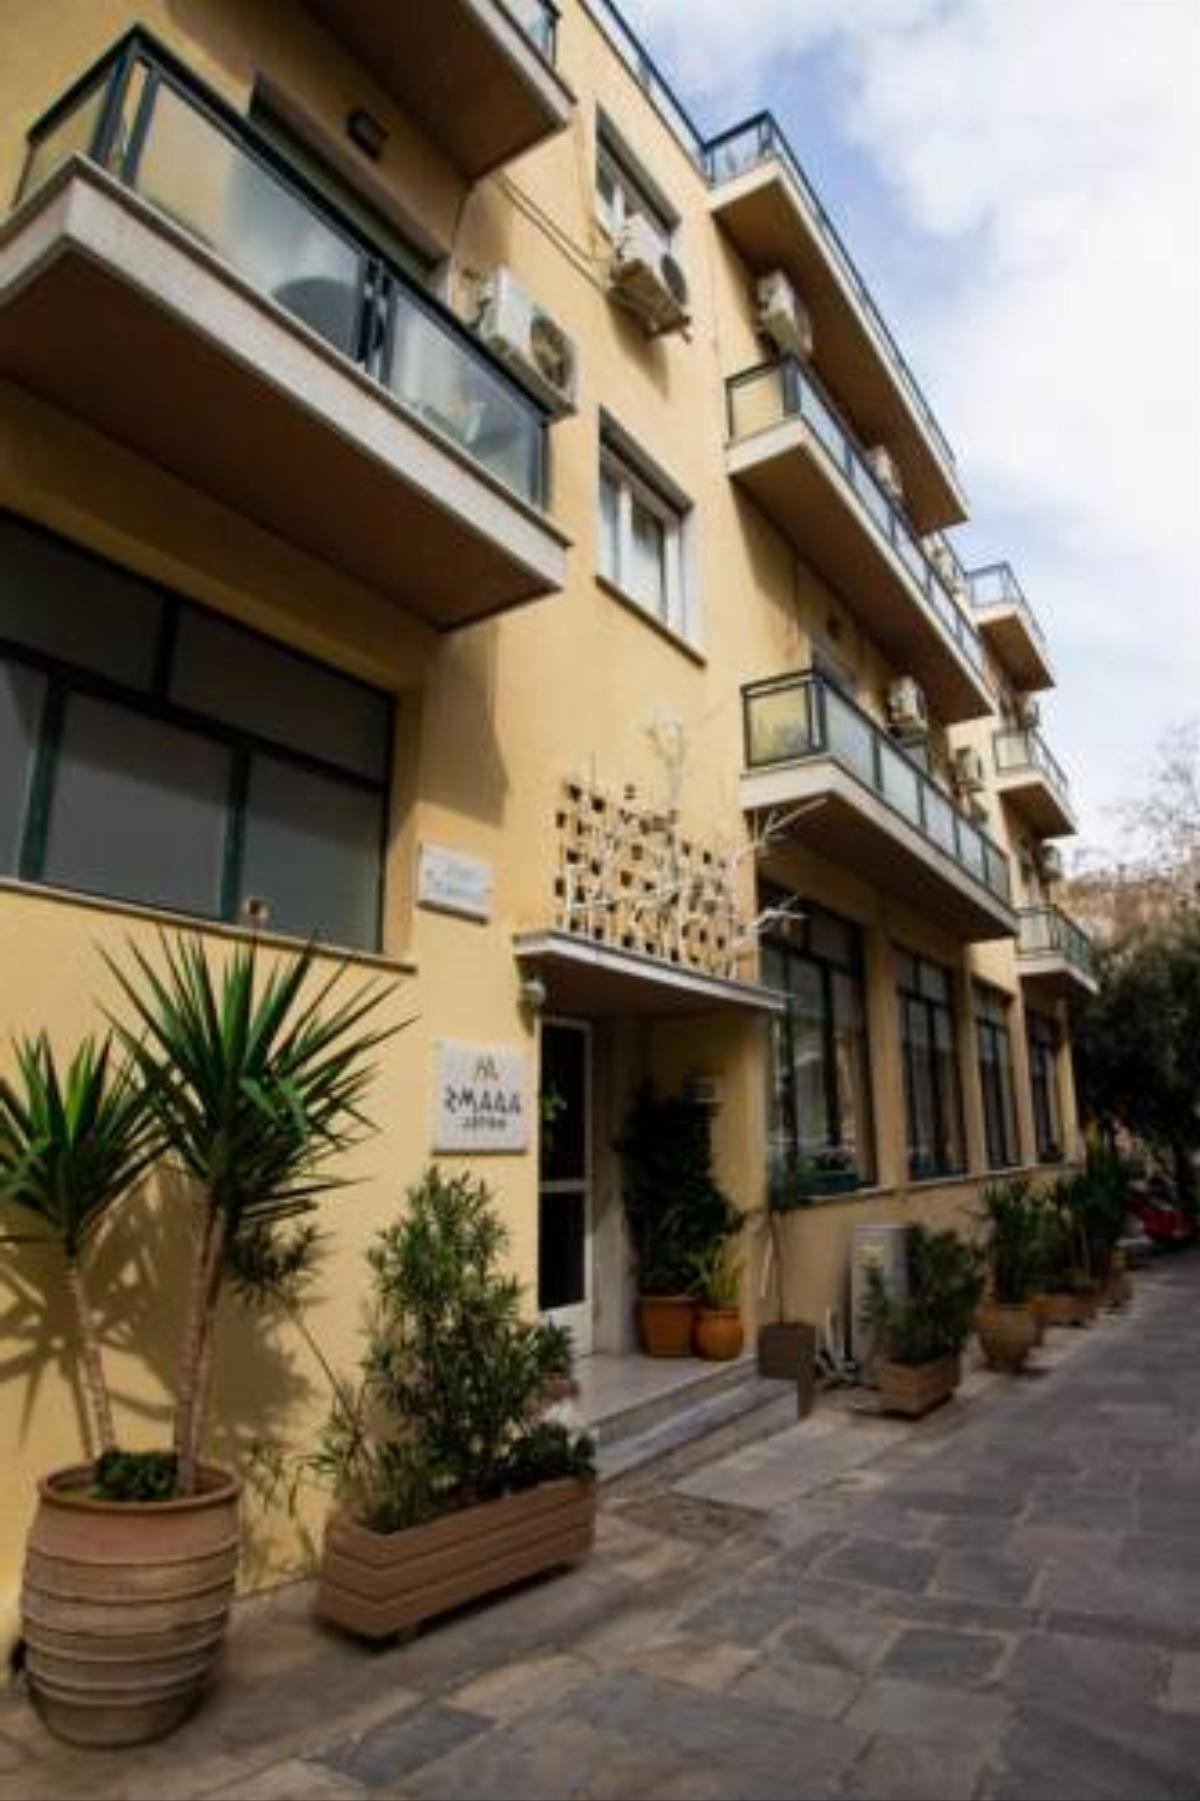 Adam's Hotel Hotel Athens Greece